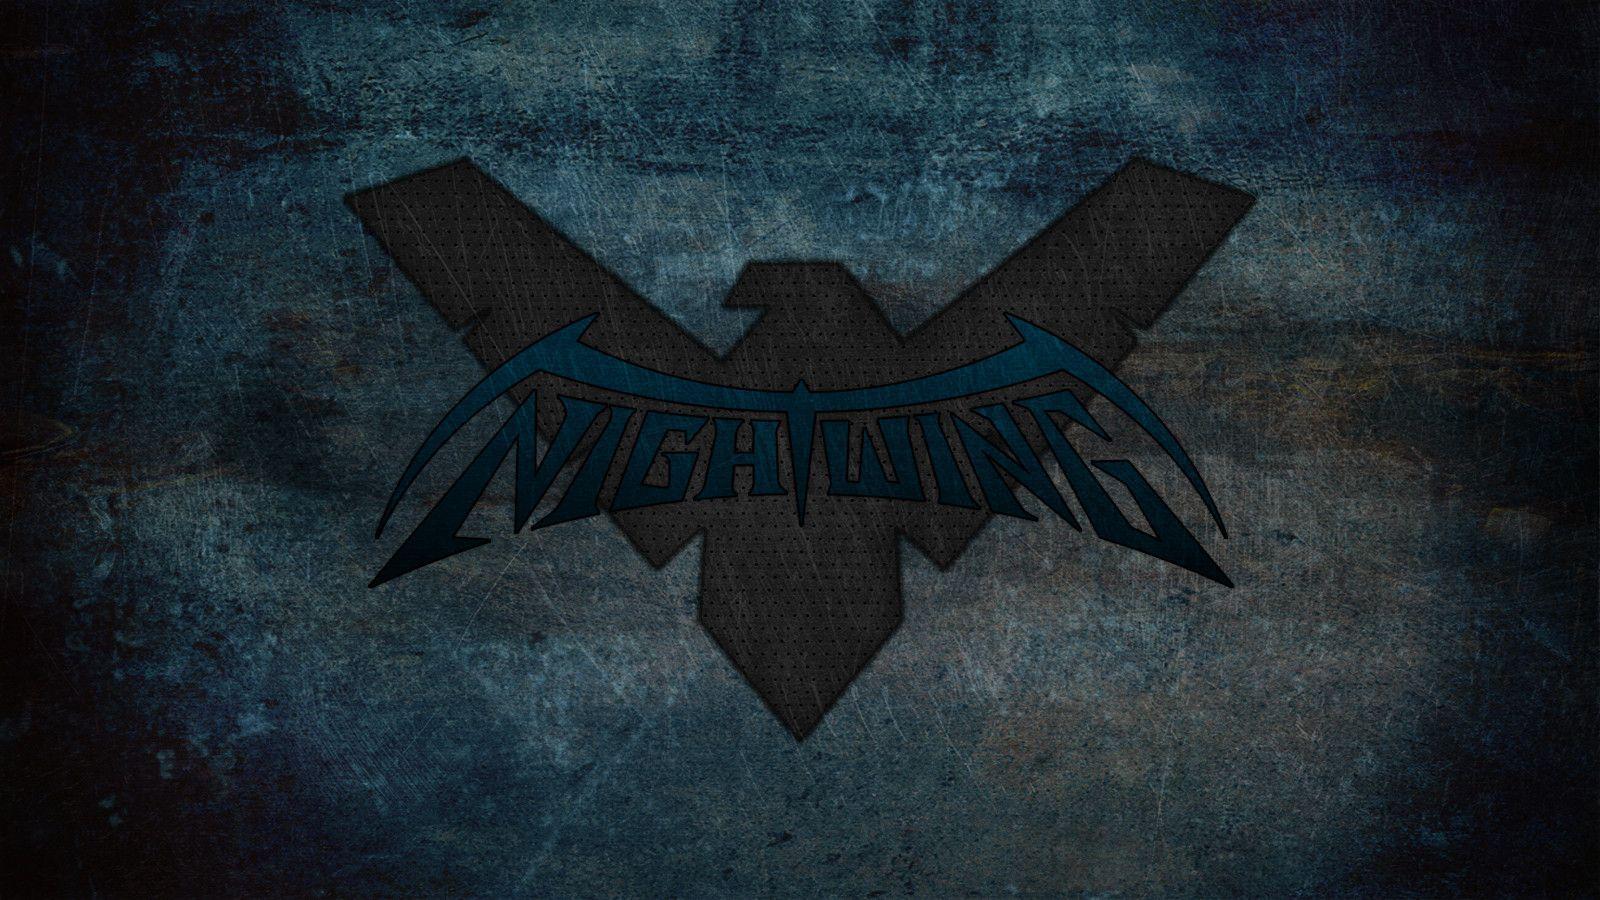 Nightwing Computer Wallpaper, Desktop Background 1600x900 Id: 436603